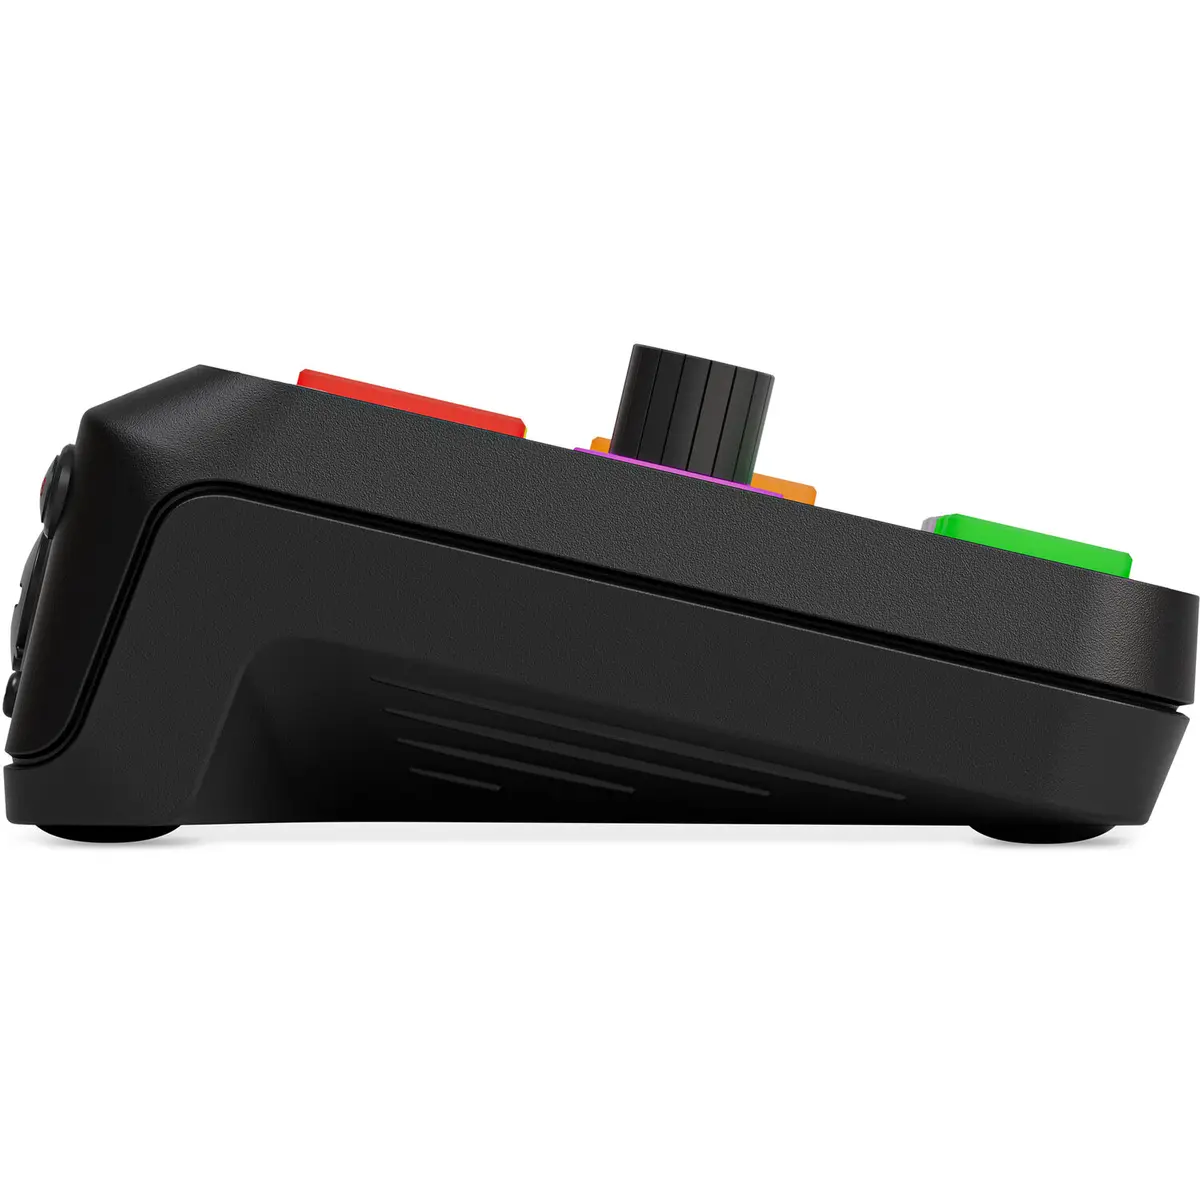 2. Rode Streamer X Audio Interface,Video Capture Card